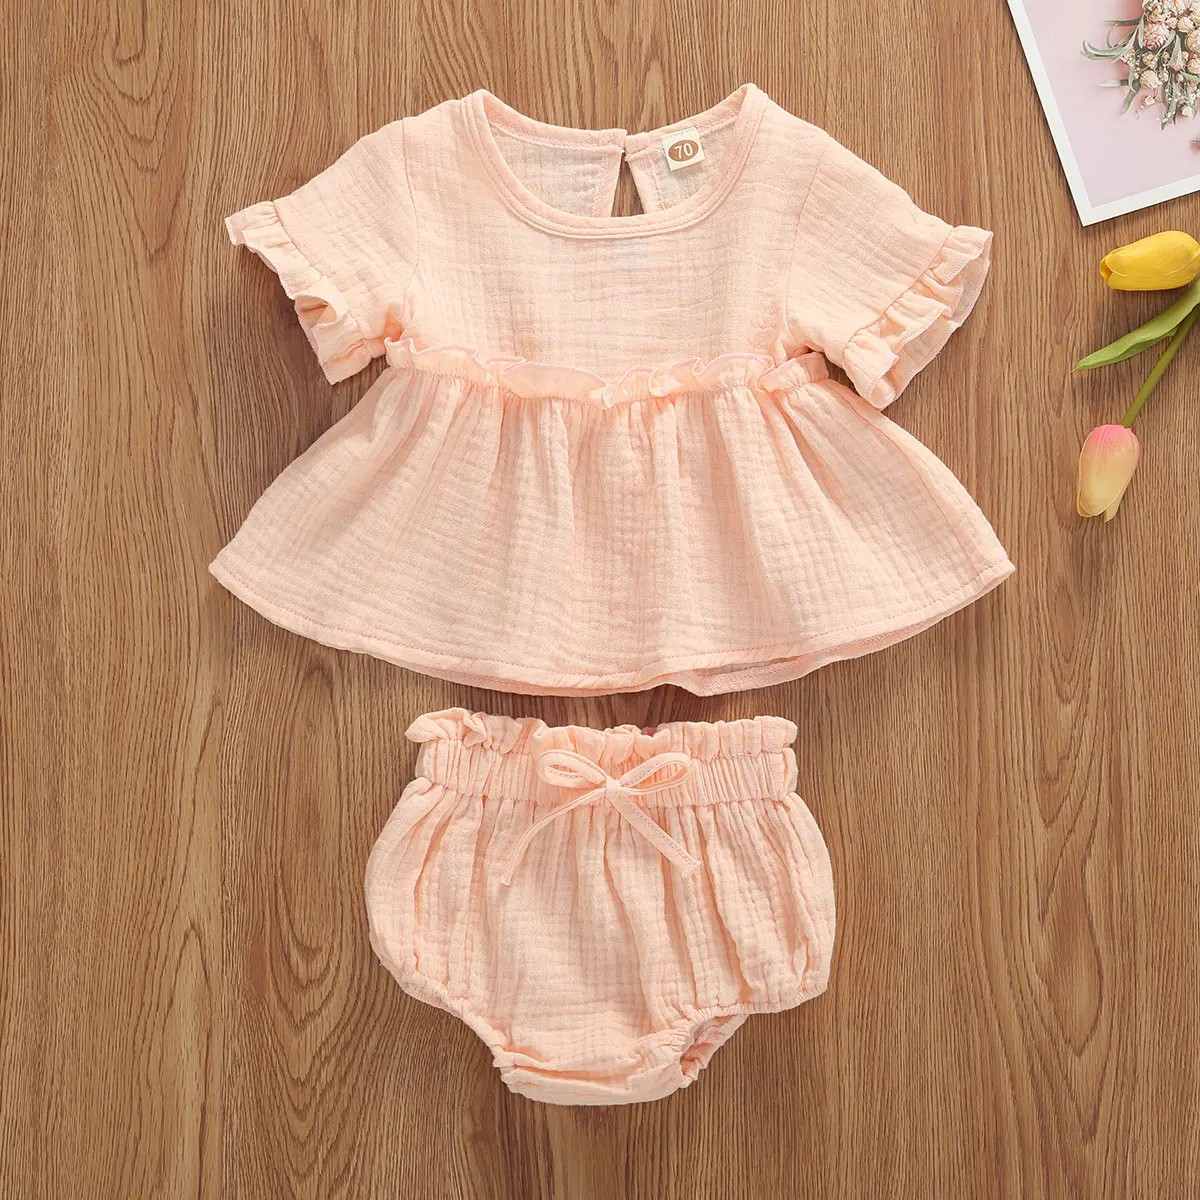 0-24M Newborn Infant Baby Girls Solid Cotton Linen Clothes Sets Ruffles Short Sleeve Tops Dress Shirt+ Shorts 2pcs Sets images - 6